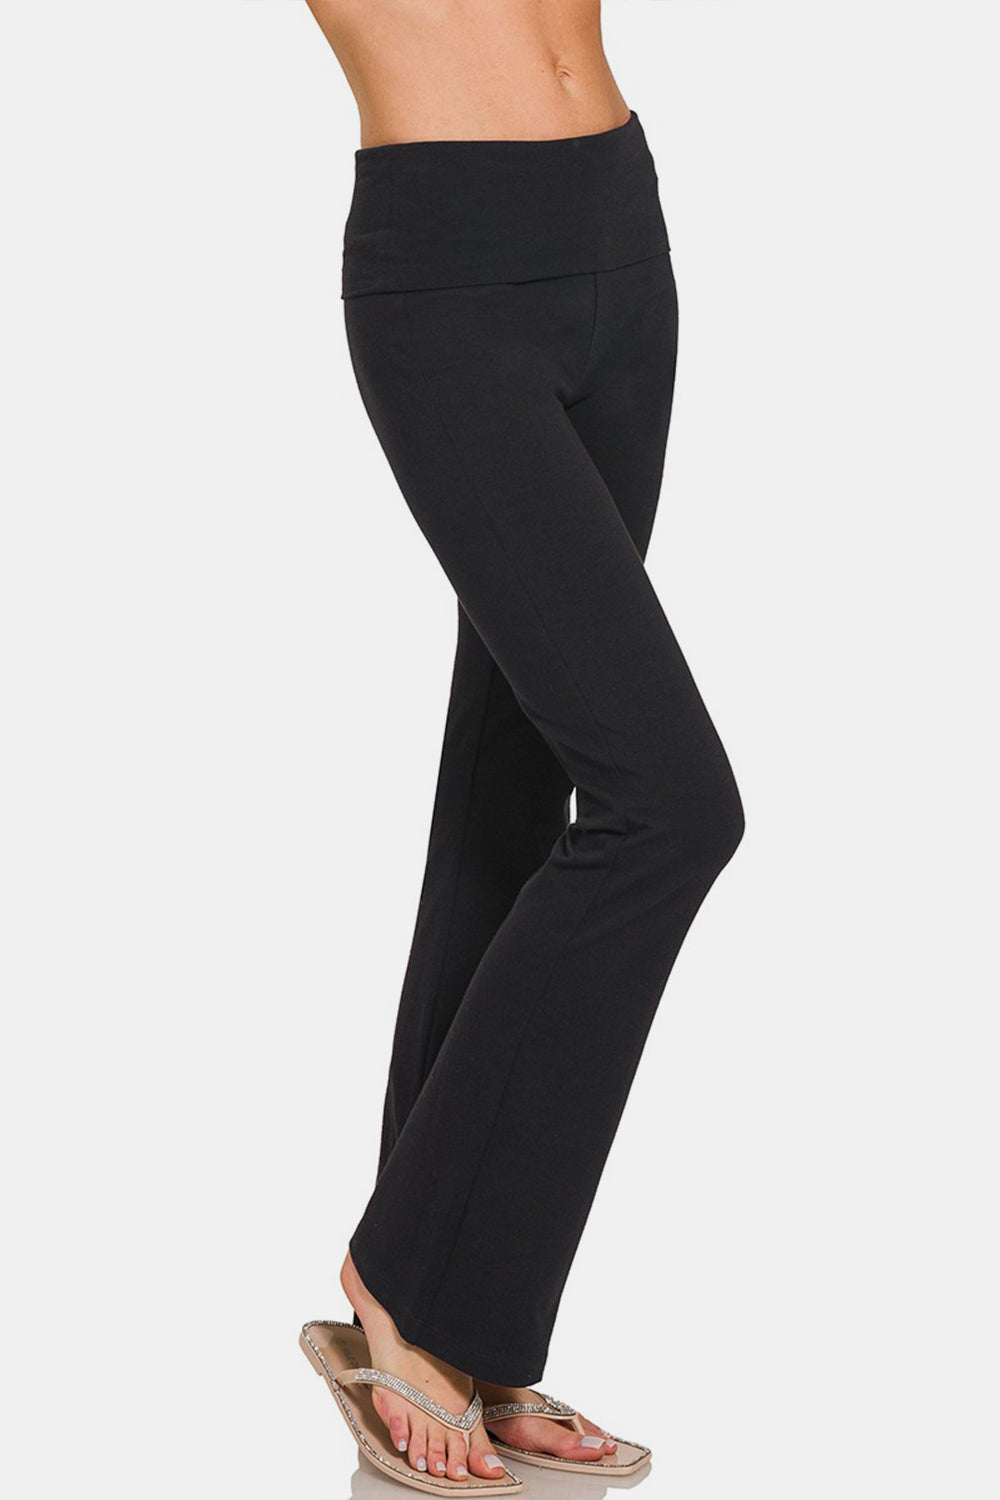 Black yoga pants designed for flexibility and comfort